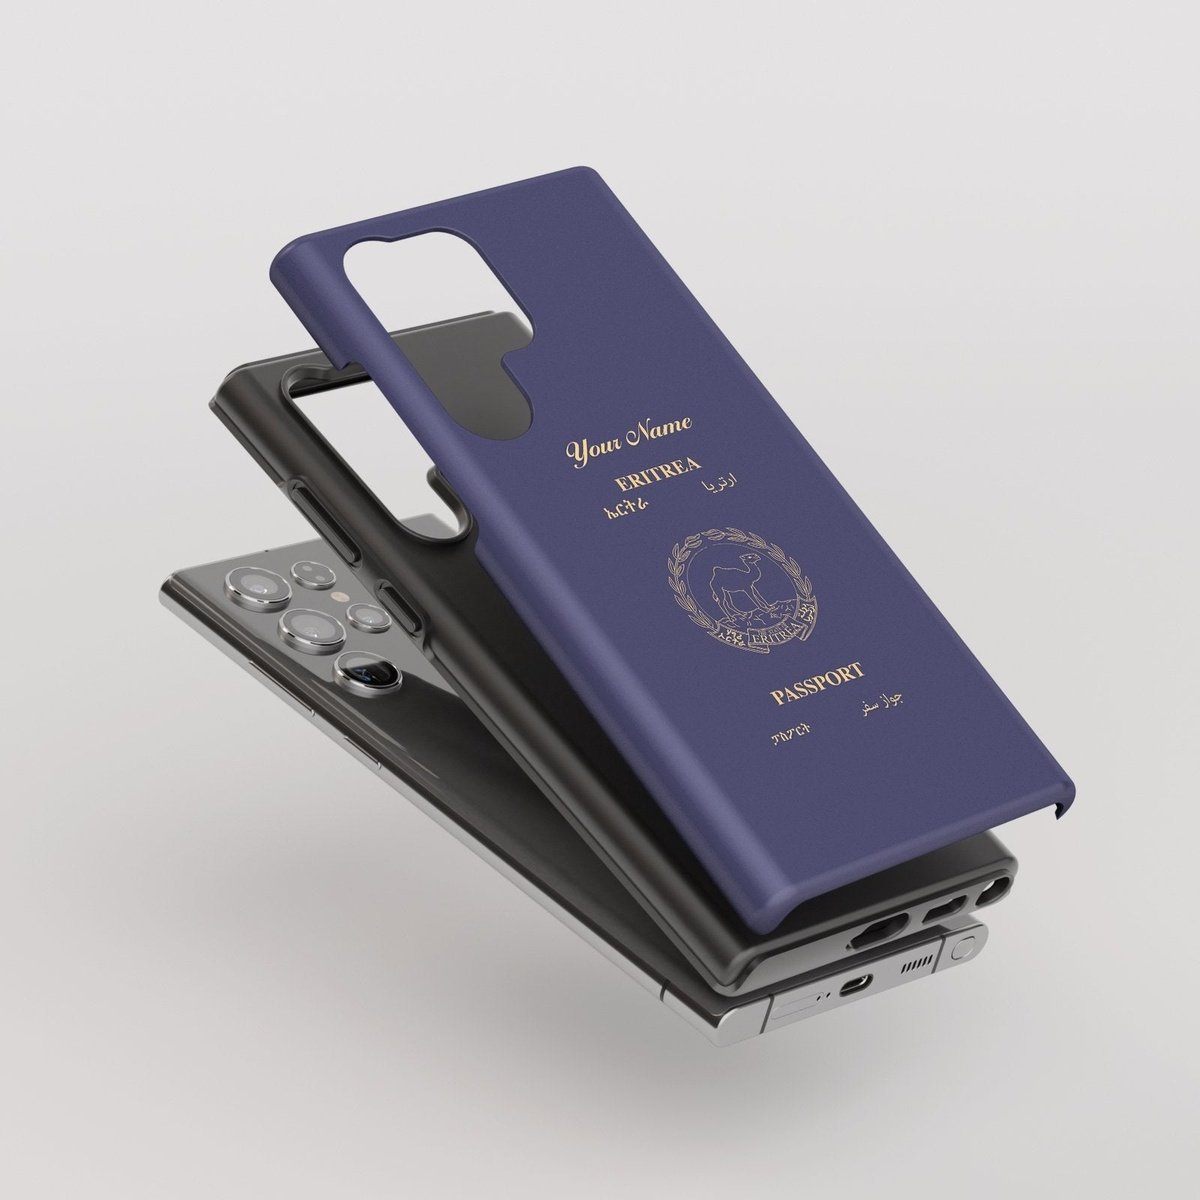 Eritrea Passport - Samsung Galaxy S Case